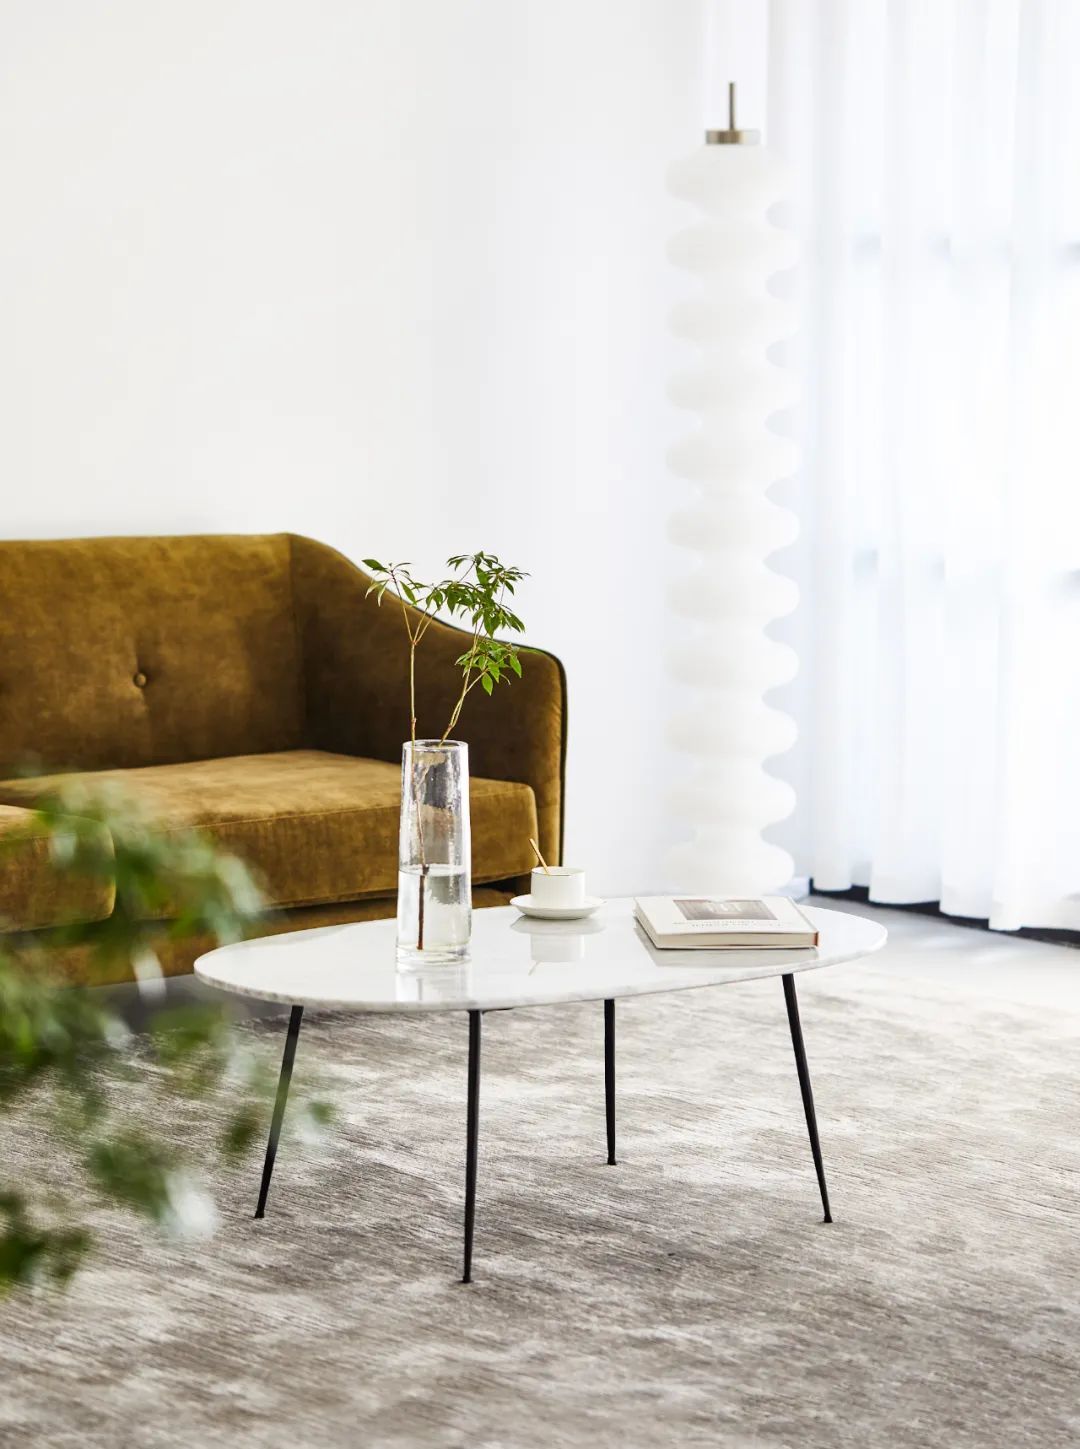 MORNINGSUN Juxi | The versatile Mona coffee table in the living room